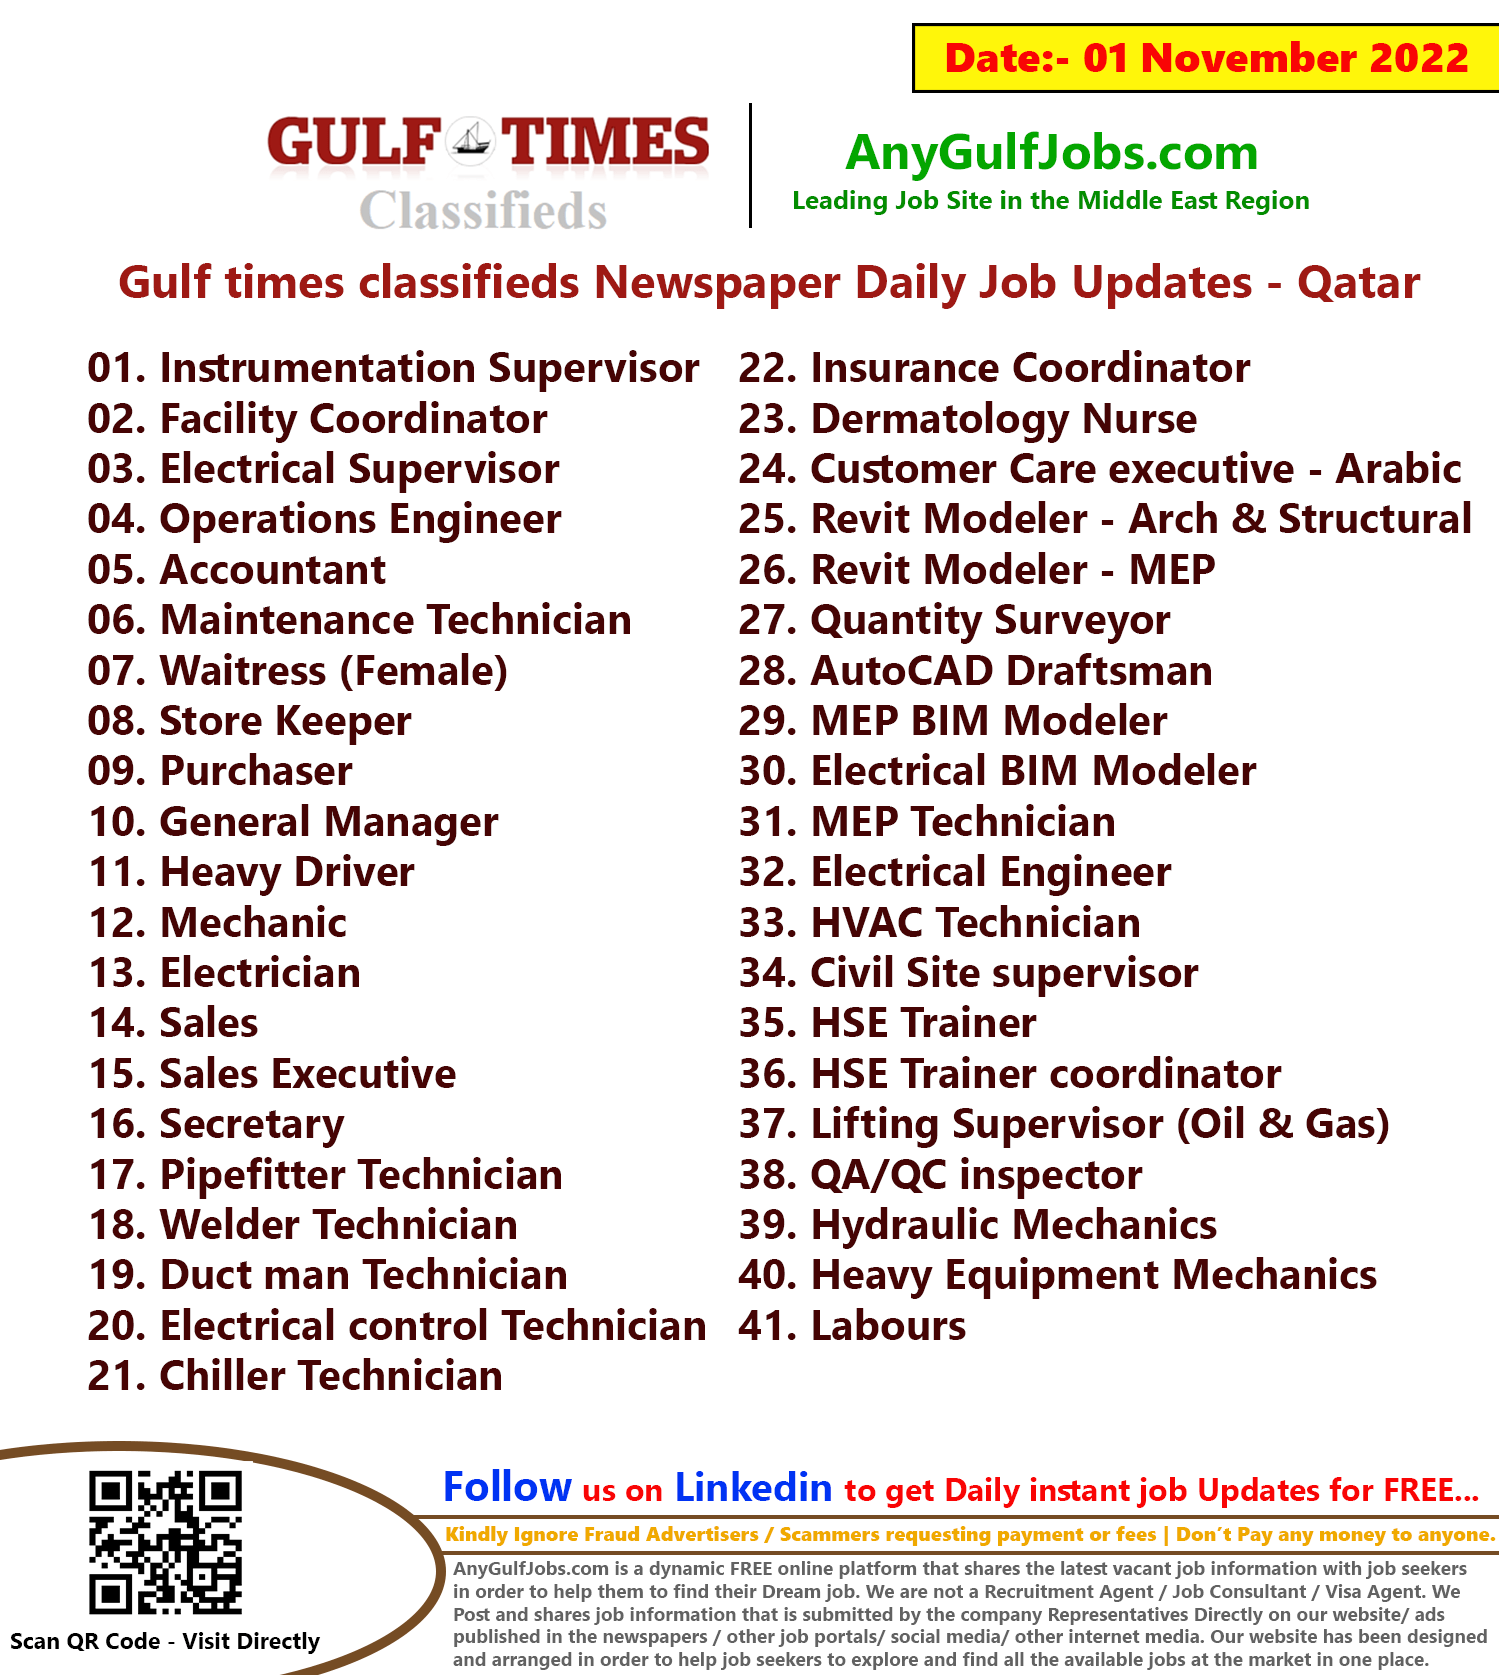 Gulf times classifieds Job Vacancies Qatar - 01 November 2022